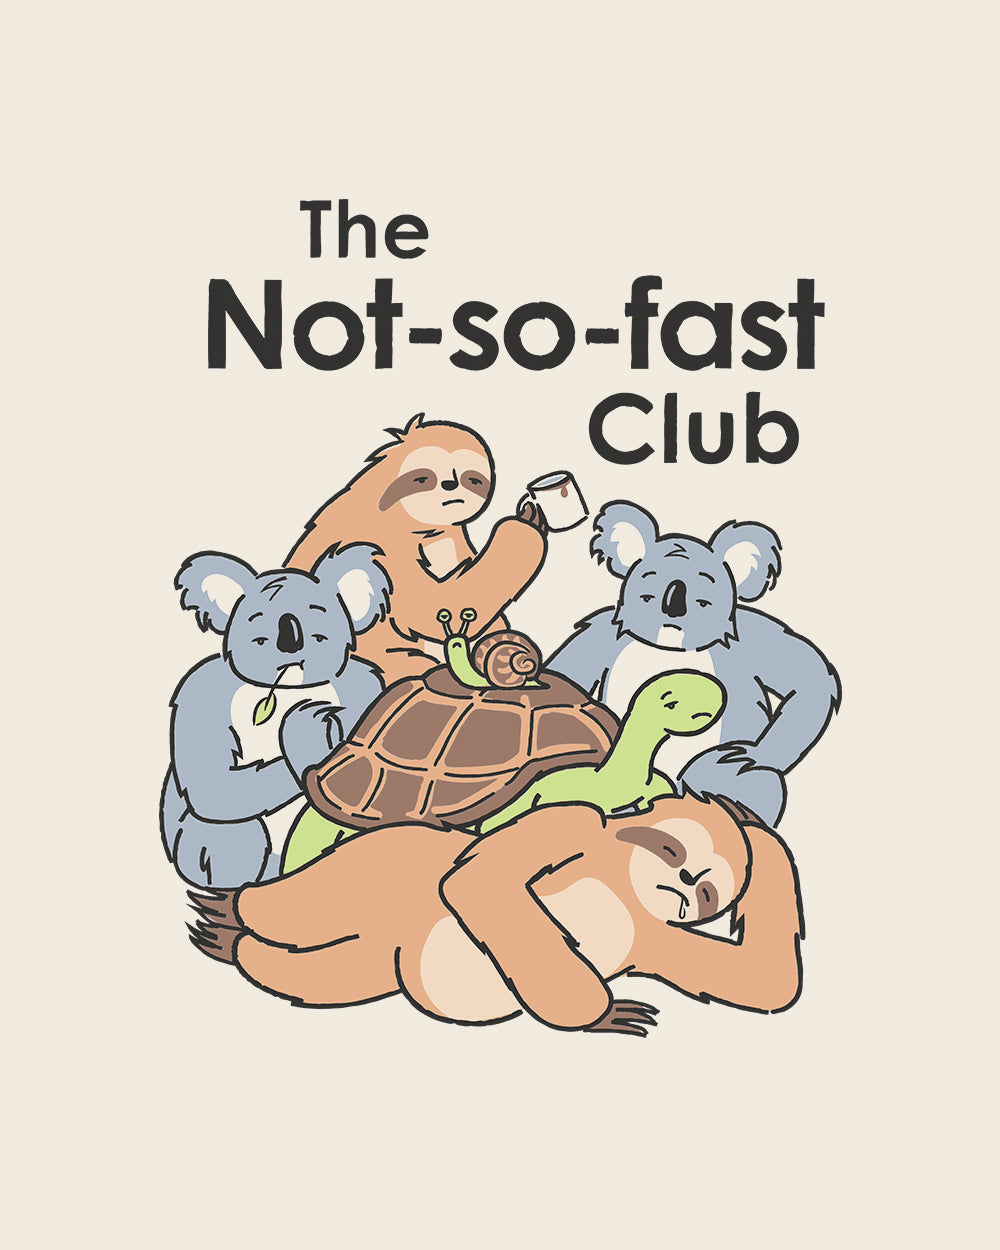 The Not-so-fast Club T-Shirt Australia Online #colour_natural